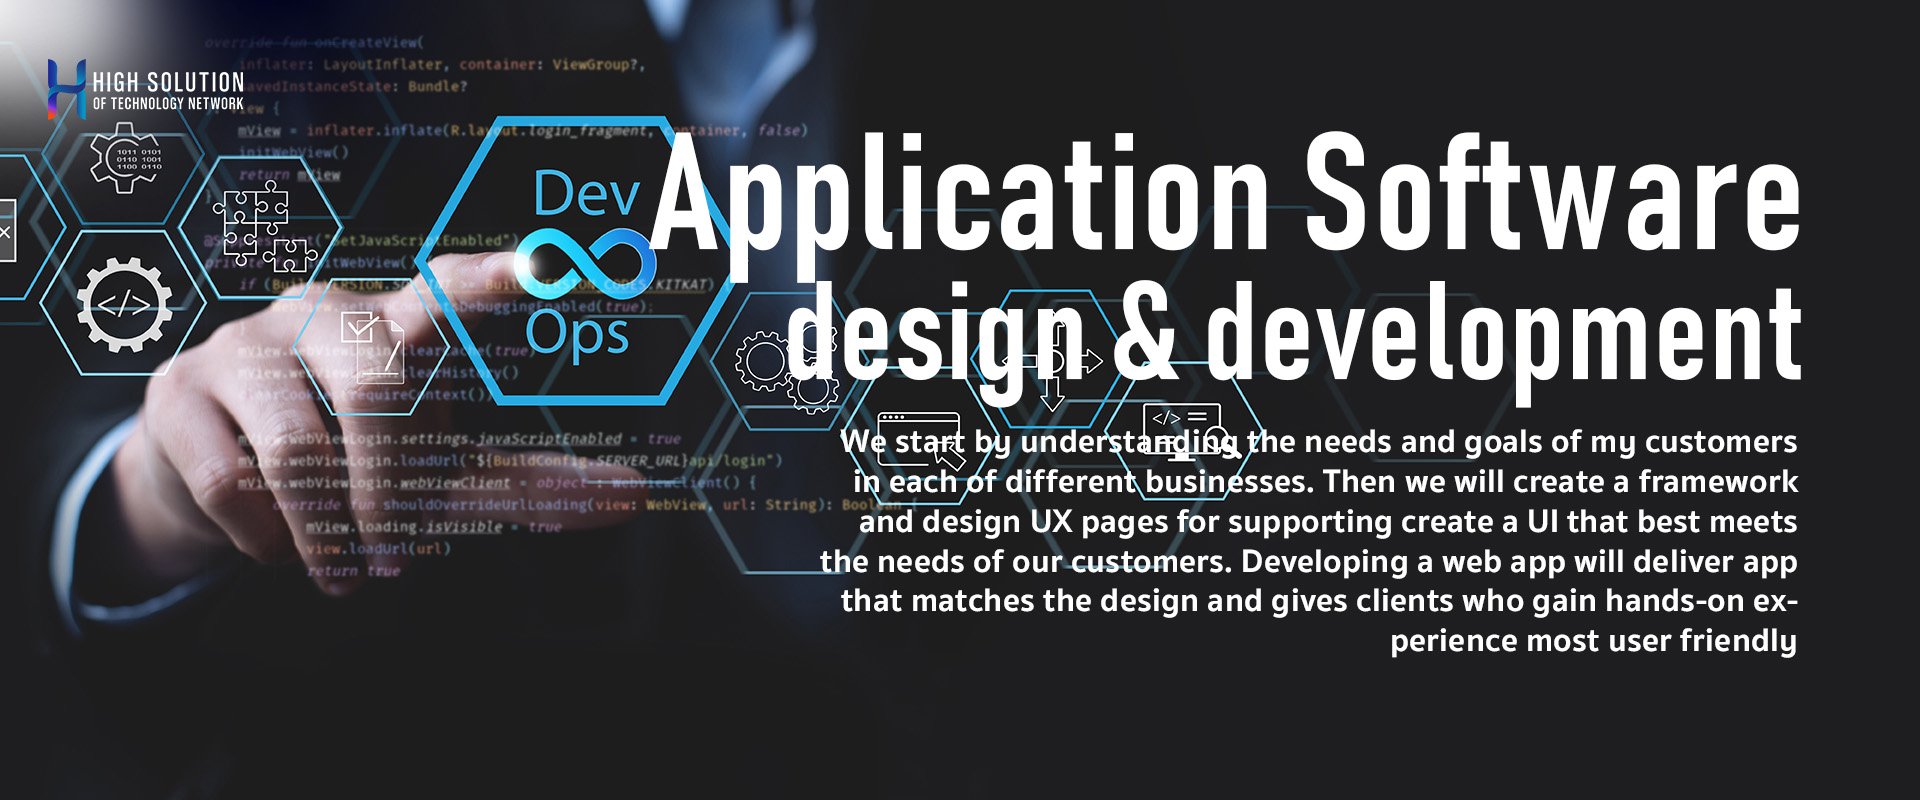 Application_Software_design_Development_By_Highsolution